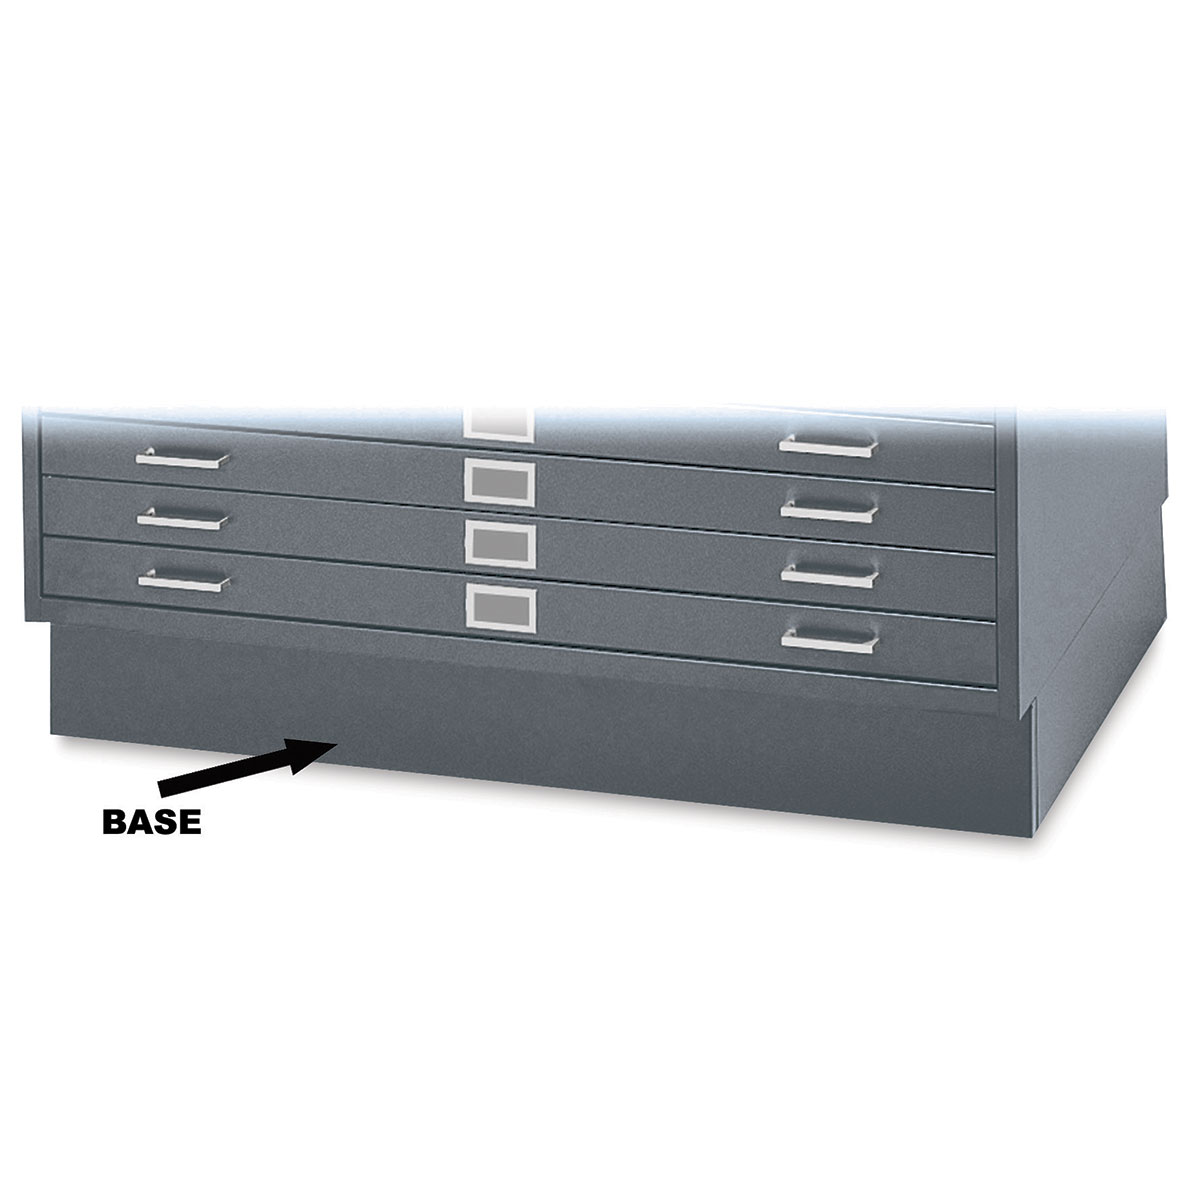 Safco Medium Facil 5 Drawer Metal Flat Files Cabinet in Light Gray